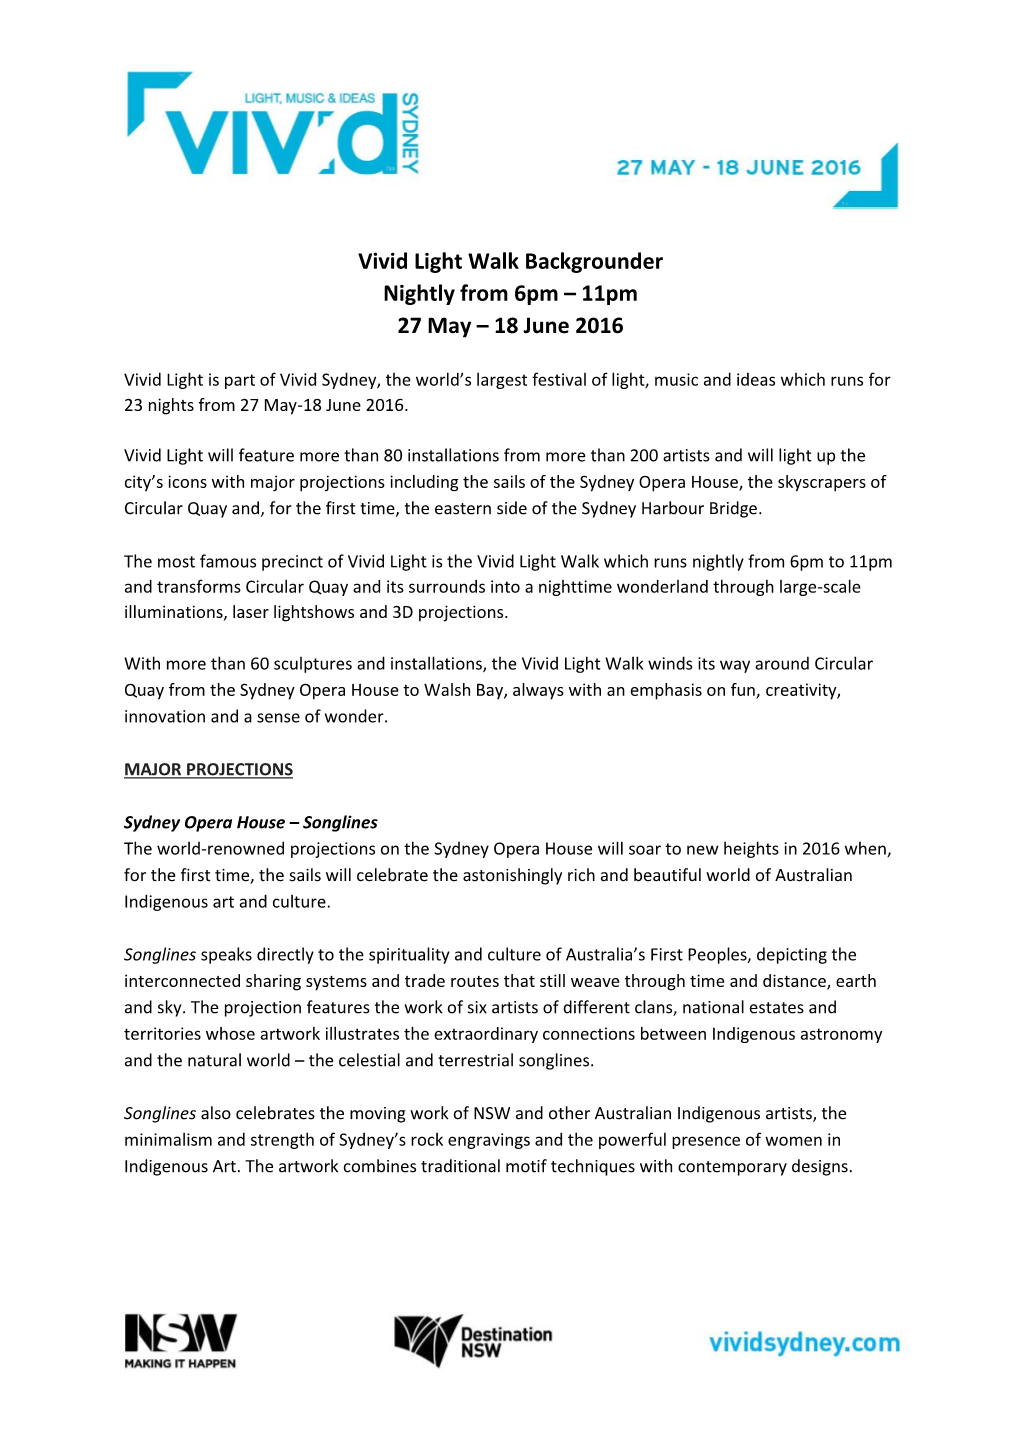 Media Release: Vivid Sydney Light Walk 2016 Media Backgrounder